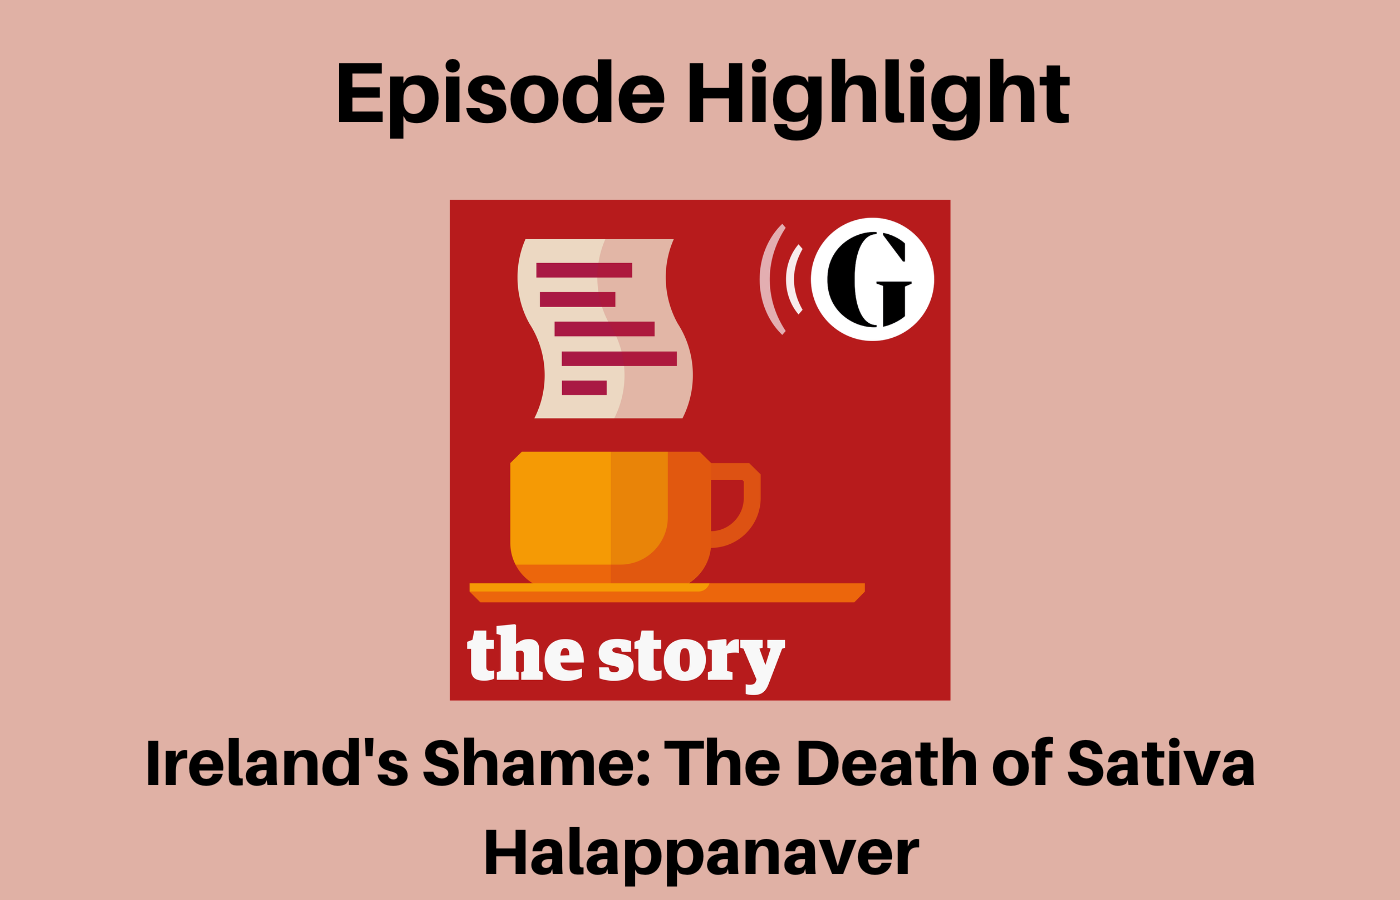 Episode Highlight: Ireland's Shame: The Death of Sativa Halappanaver